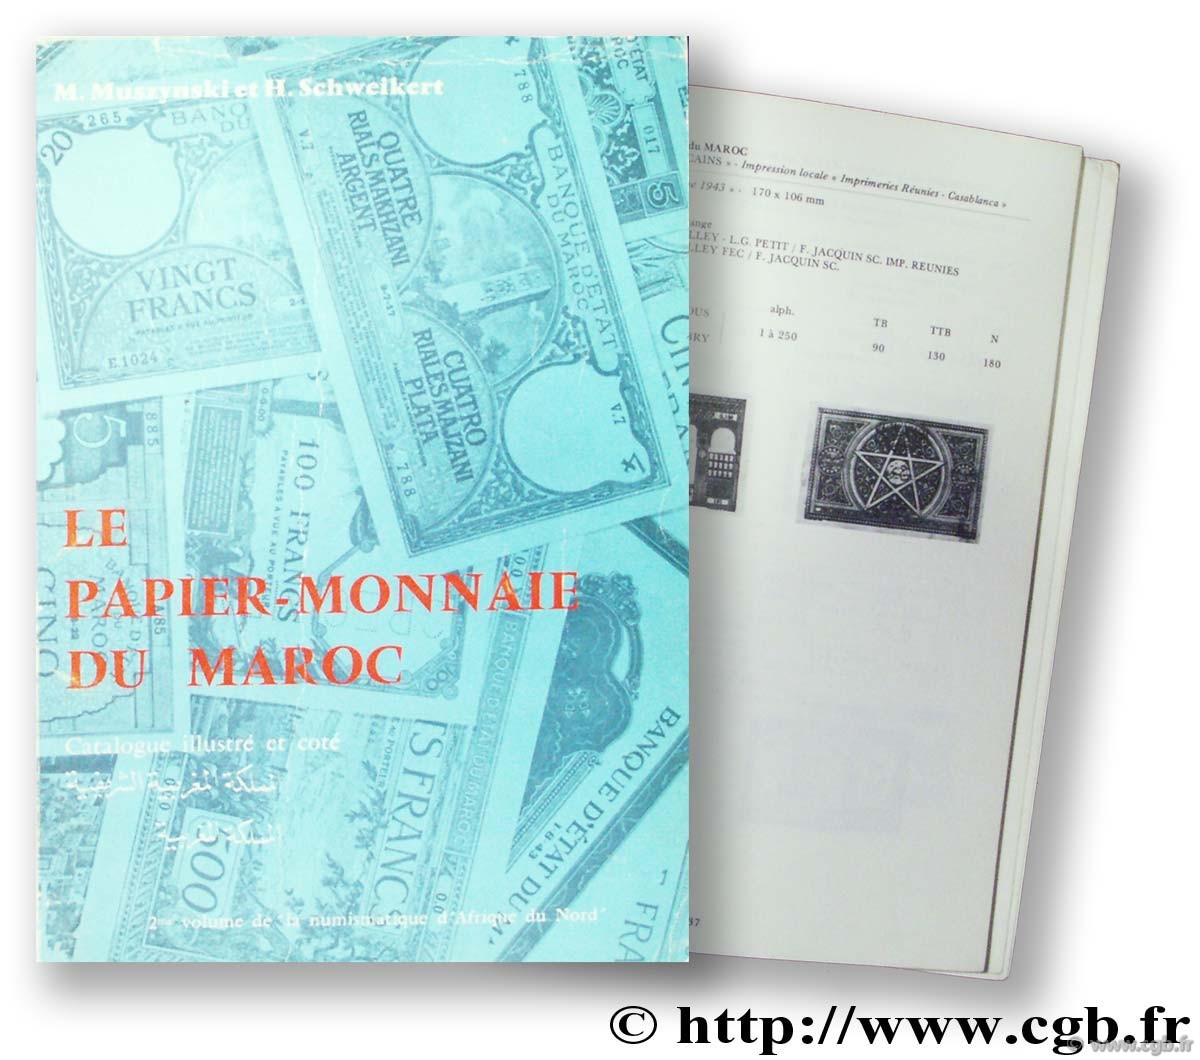 Le papier-monnaie du Maroc MUSZYNSKI M., SCHWEIKERT H.